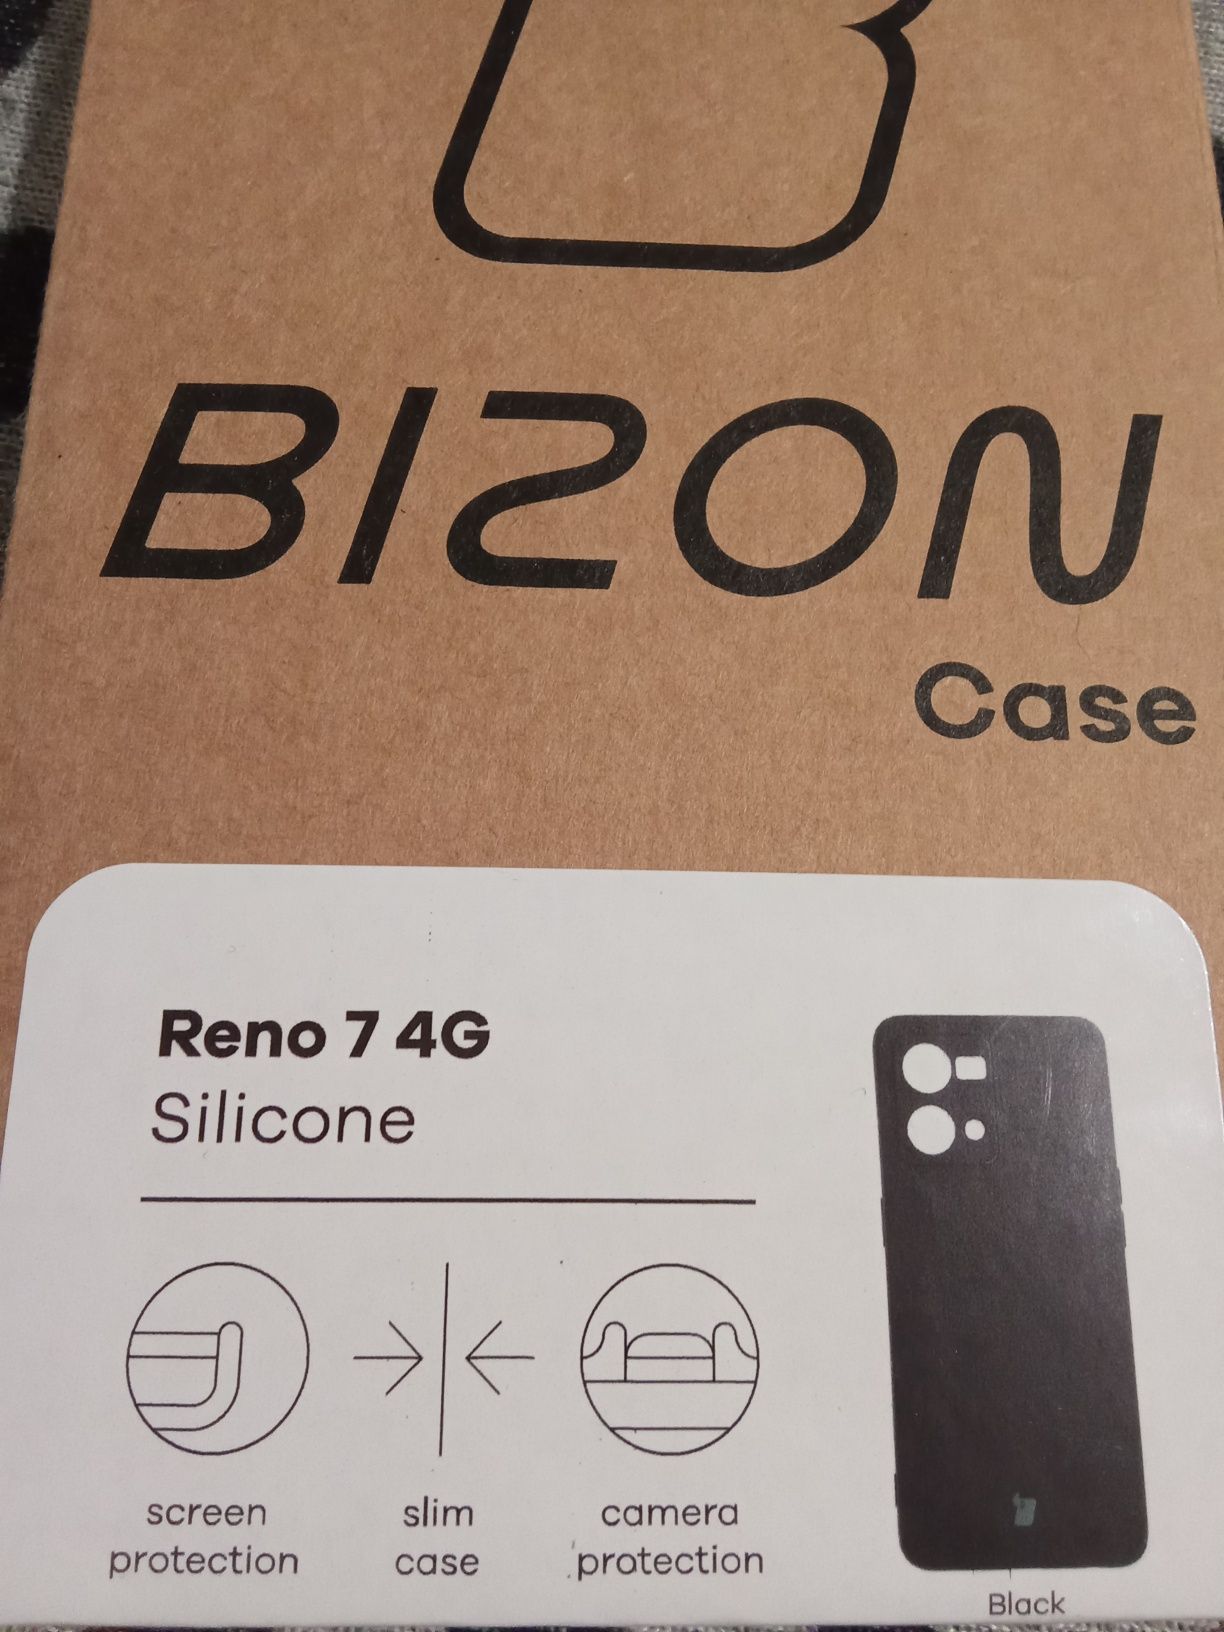 Oppo Rena 7 4G etui bizon case jakość premium.